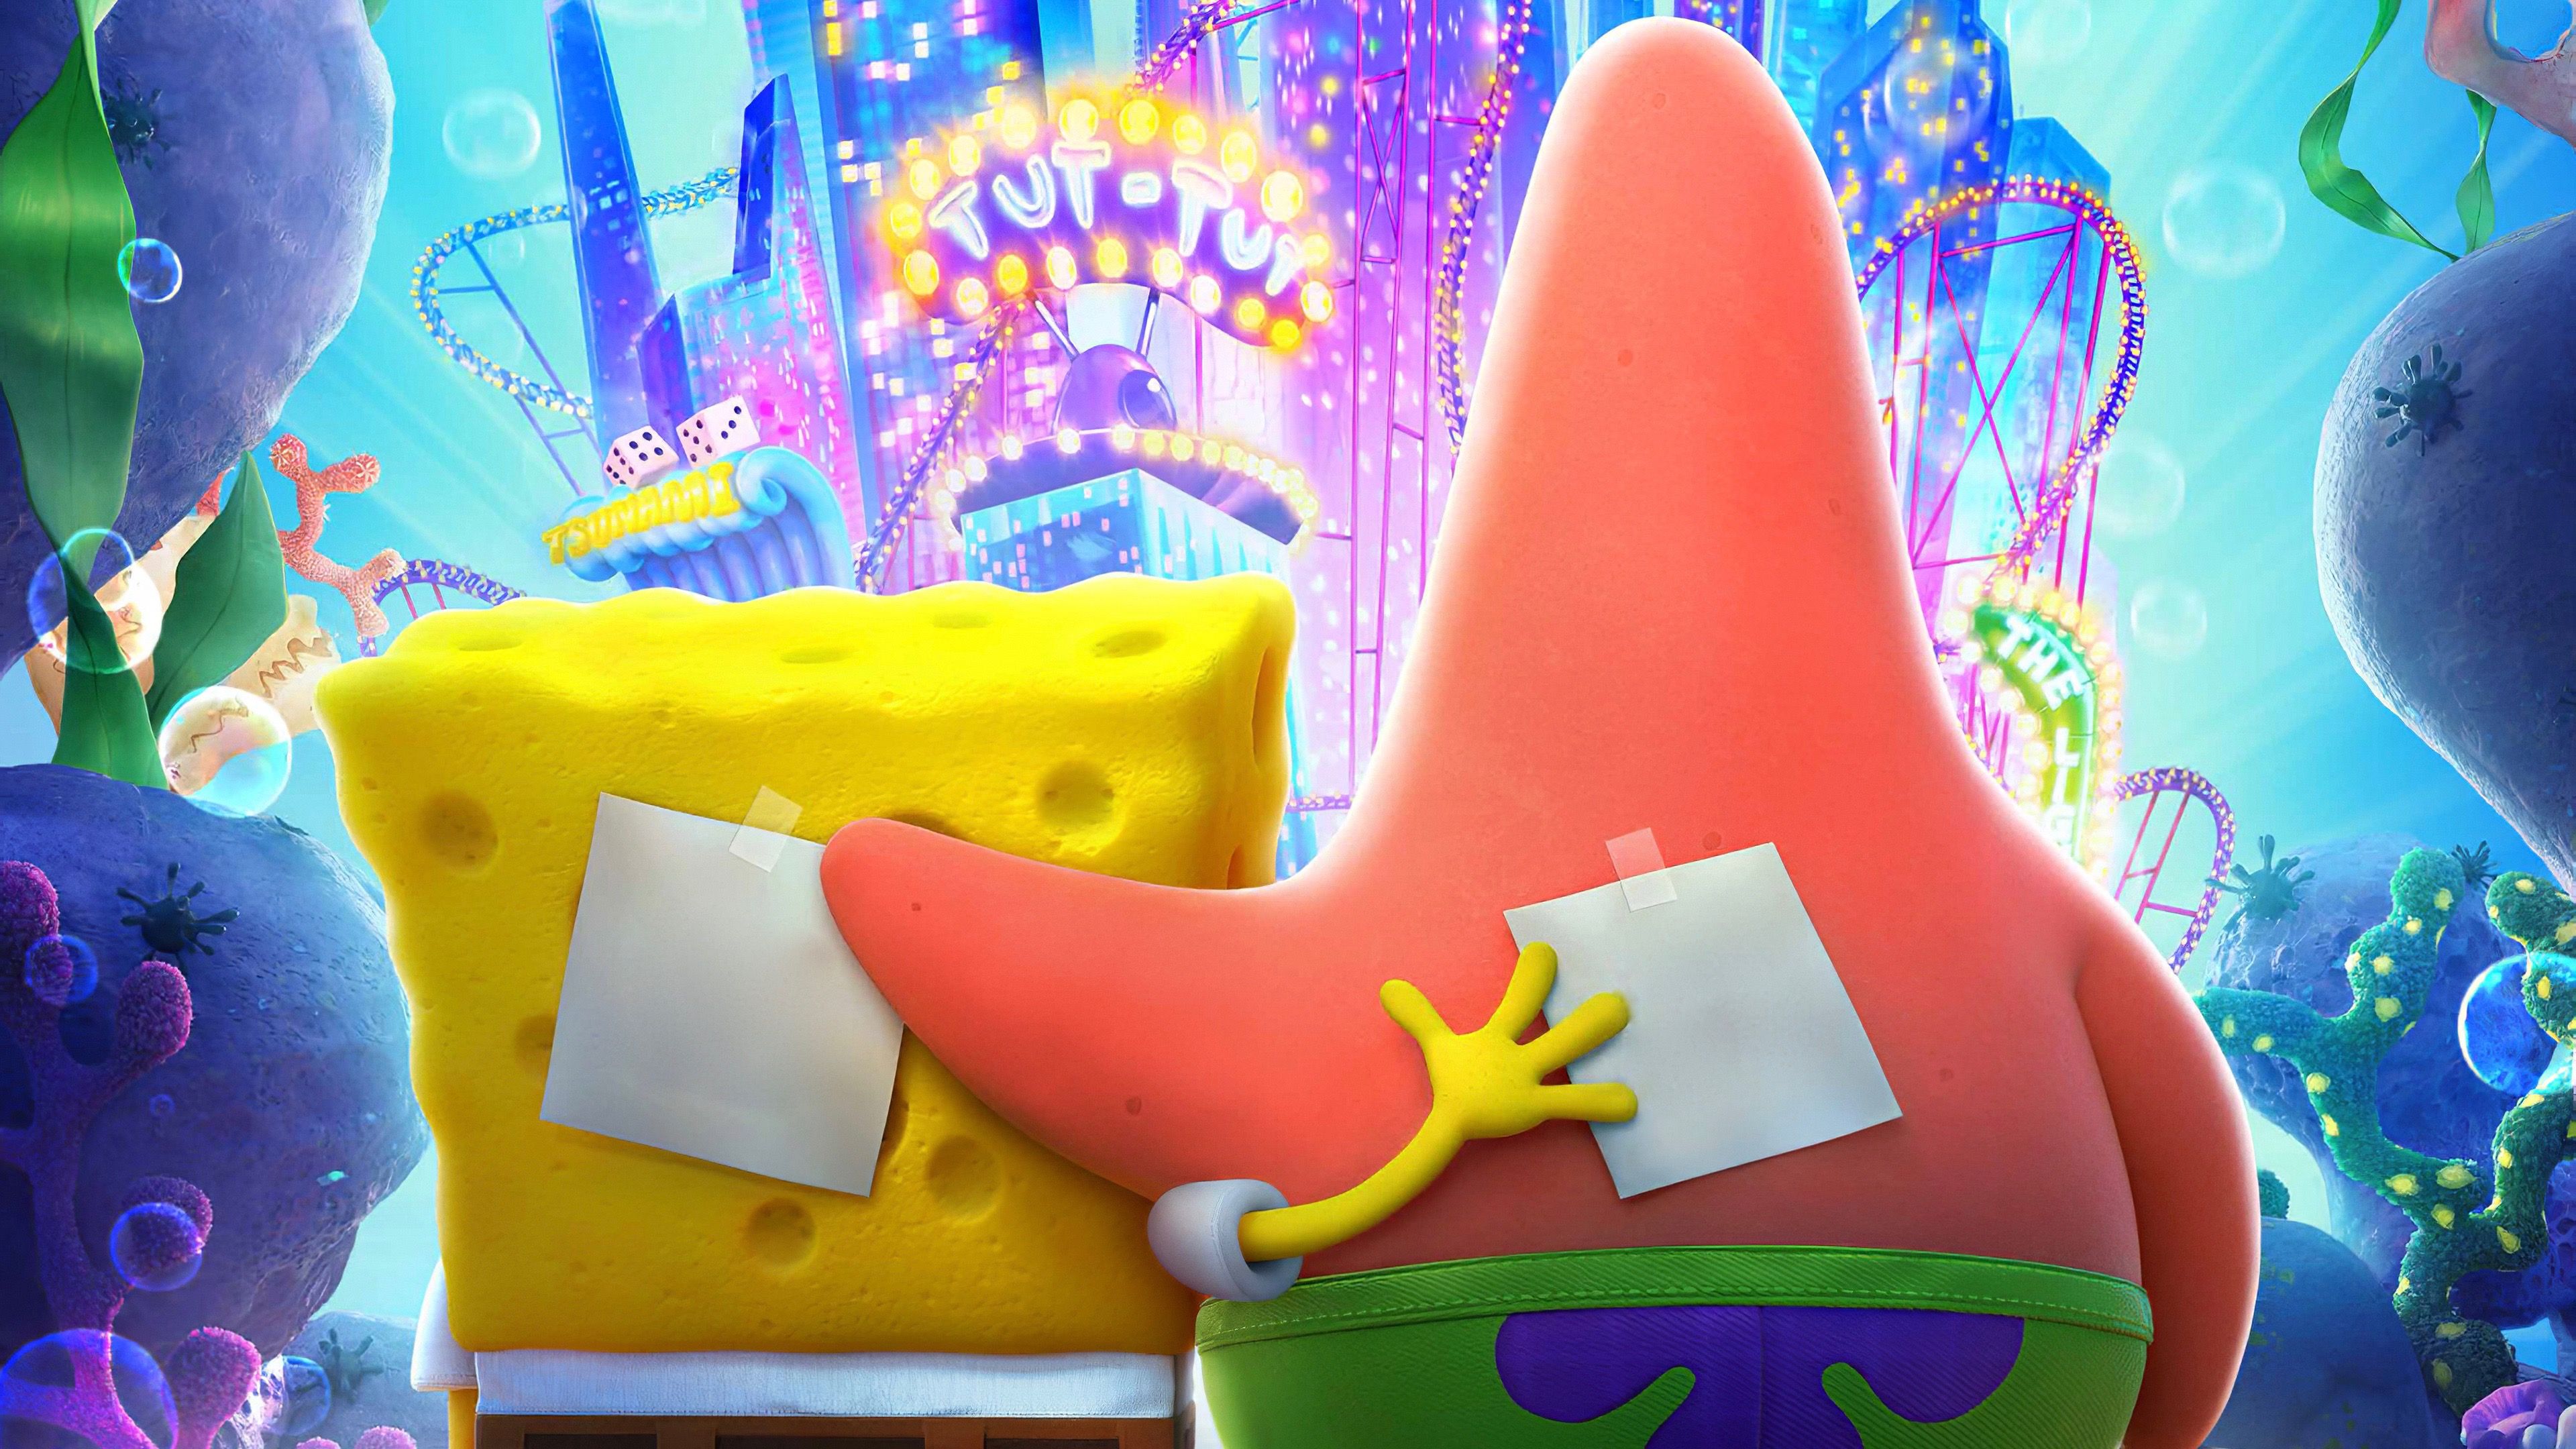 SpongeBob SquarePants & Patrick Star hugging each other 4k Ultra HD Wallpaper